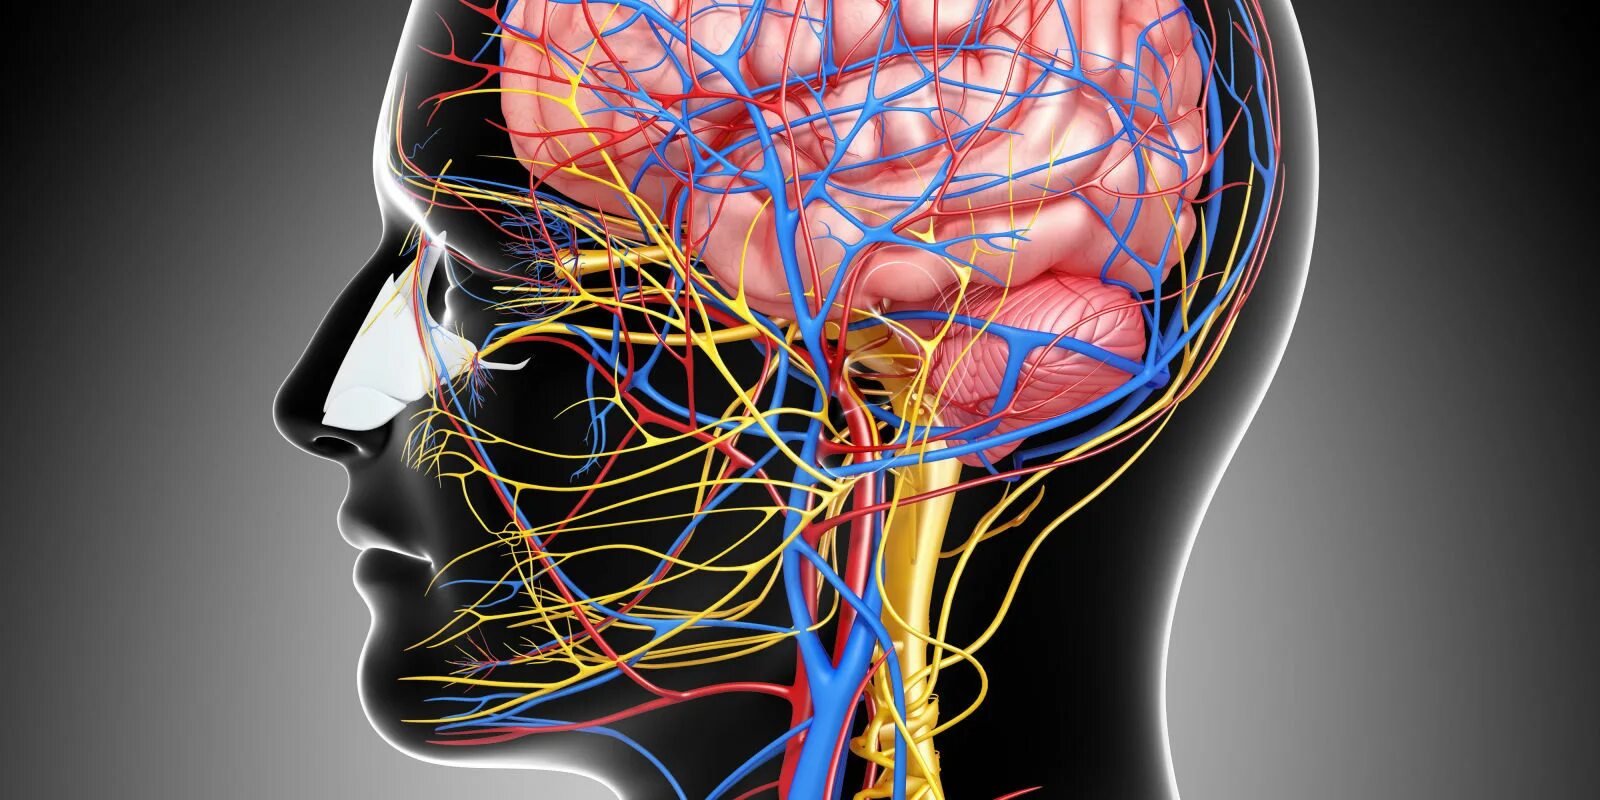 Brain nerve. Нервная система. Мозг и нервная система. Нервы человека.